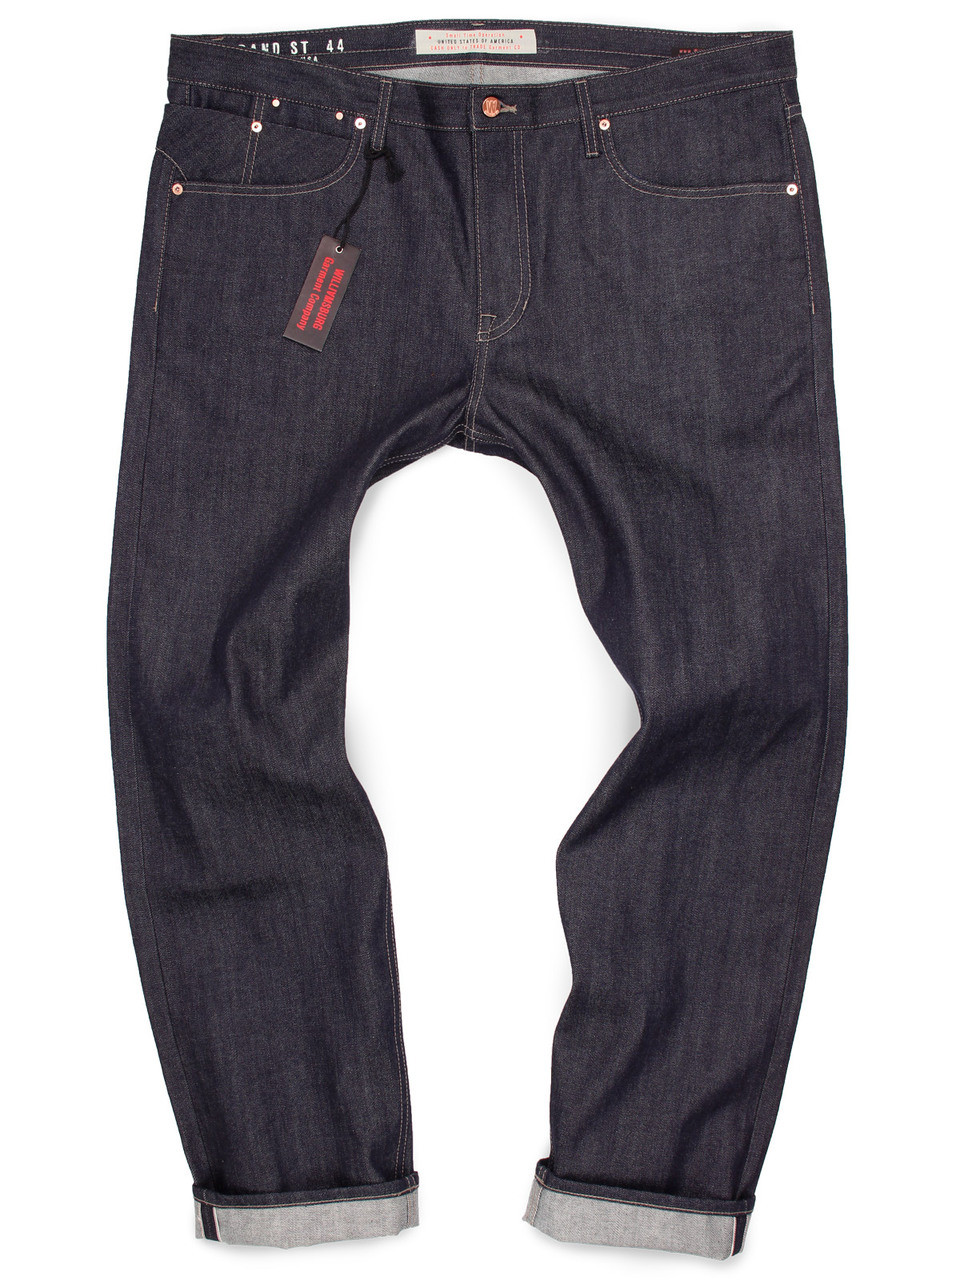 Japanese Selvedge Jeans — men's jeans and trousers - akkadenim